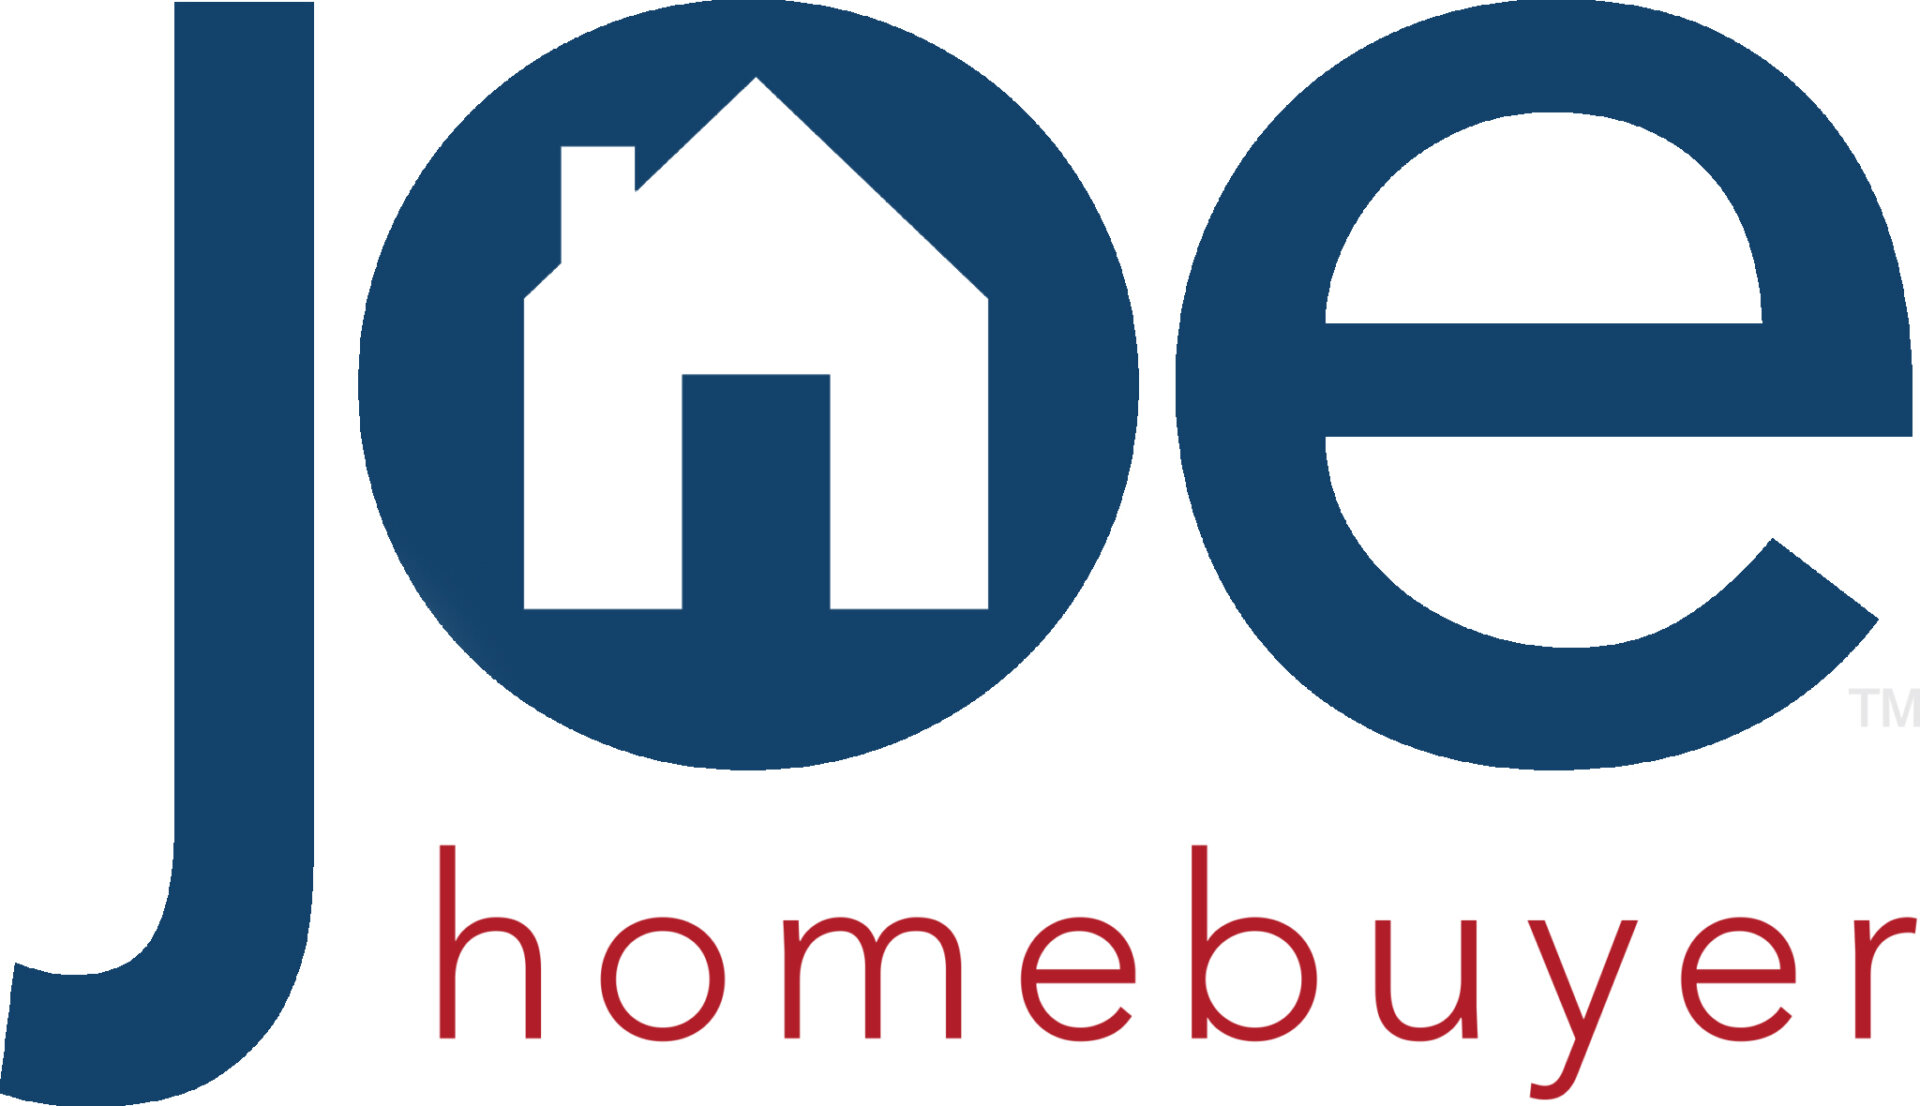 Joe Homebuyer of Eastern Pennsylvania logo